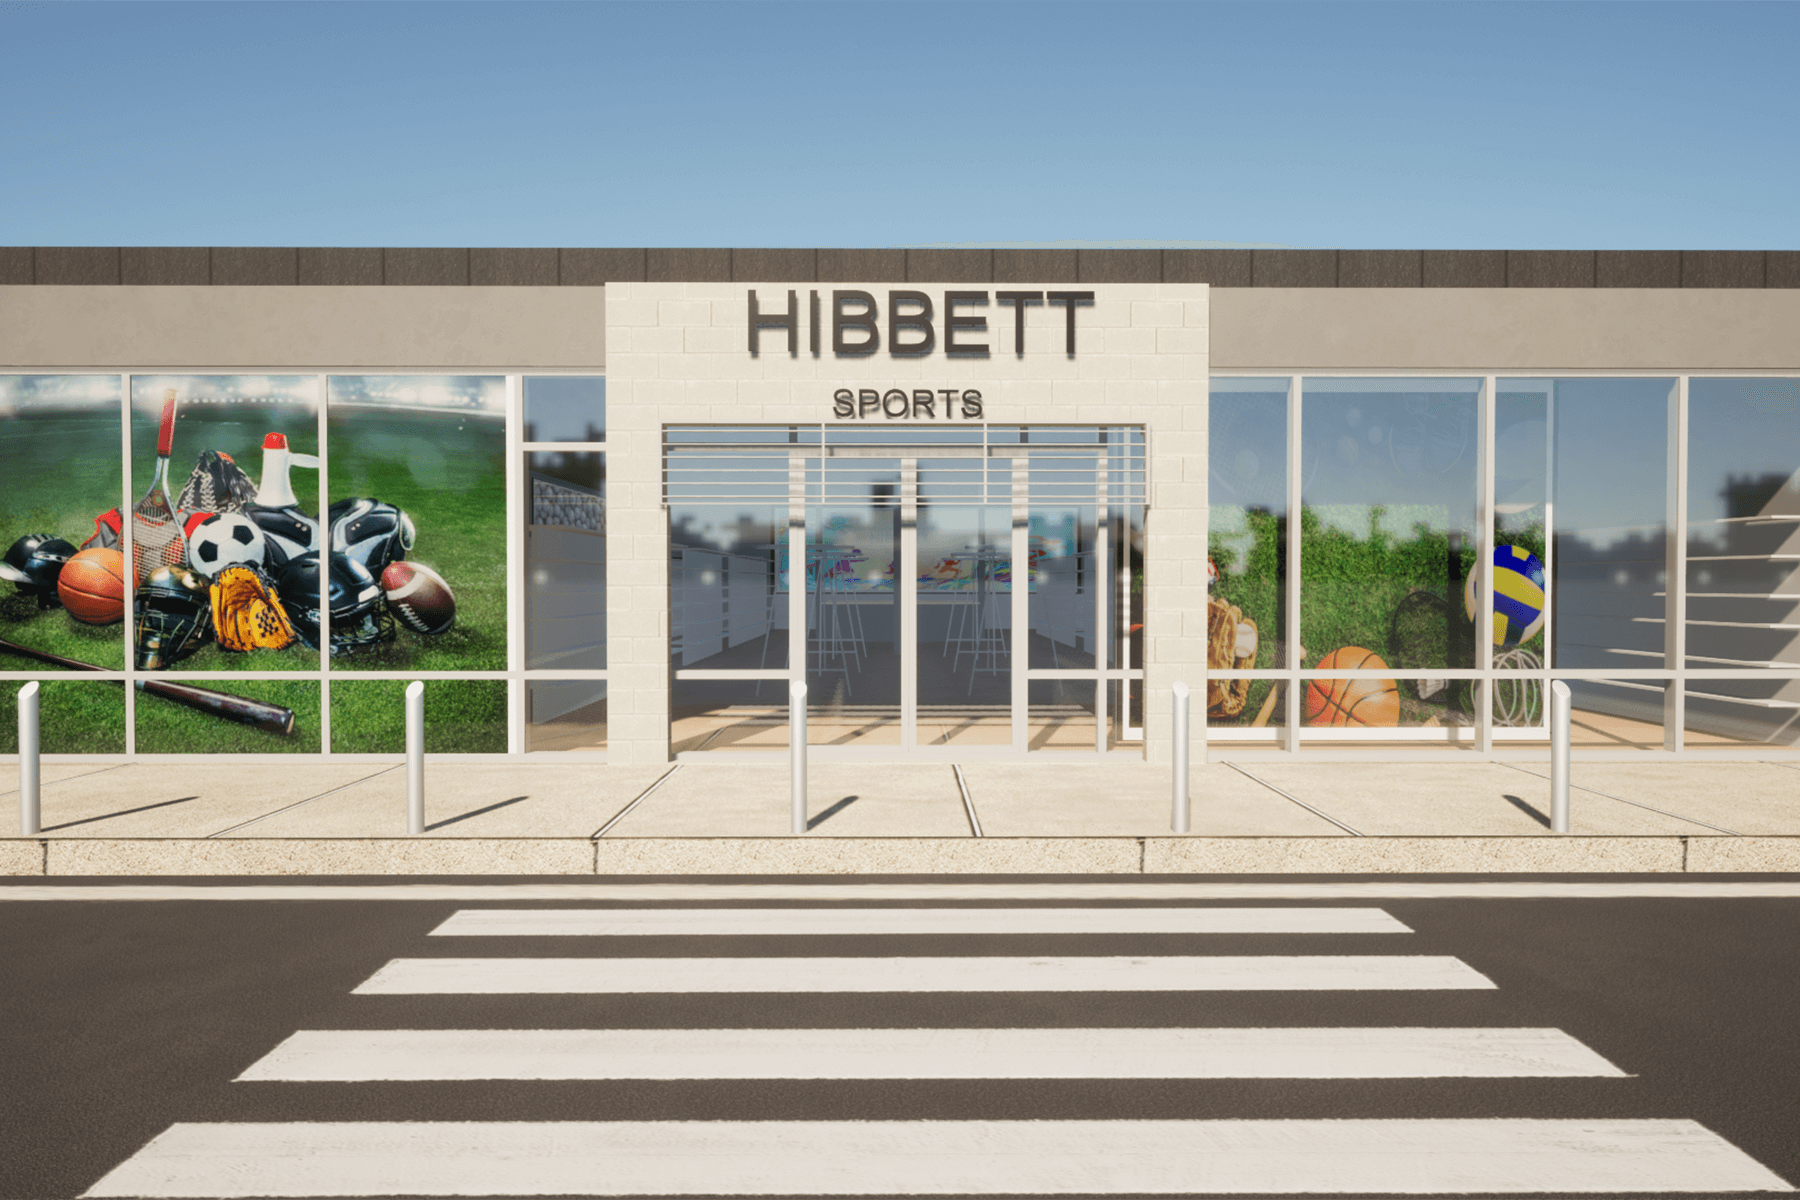 Hibbett Sports Render 2